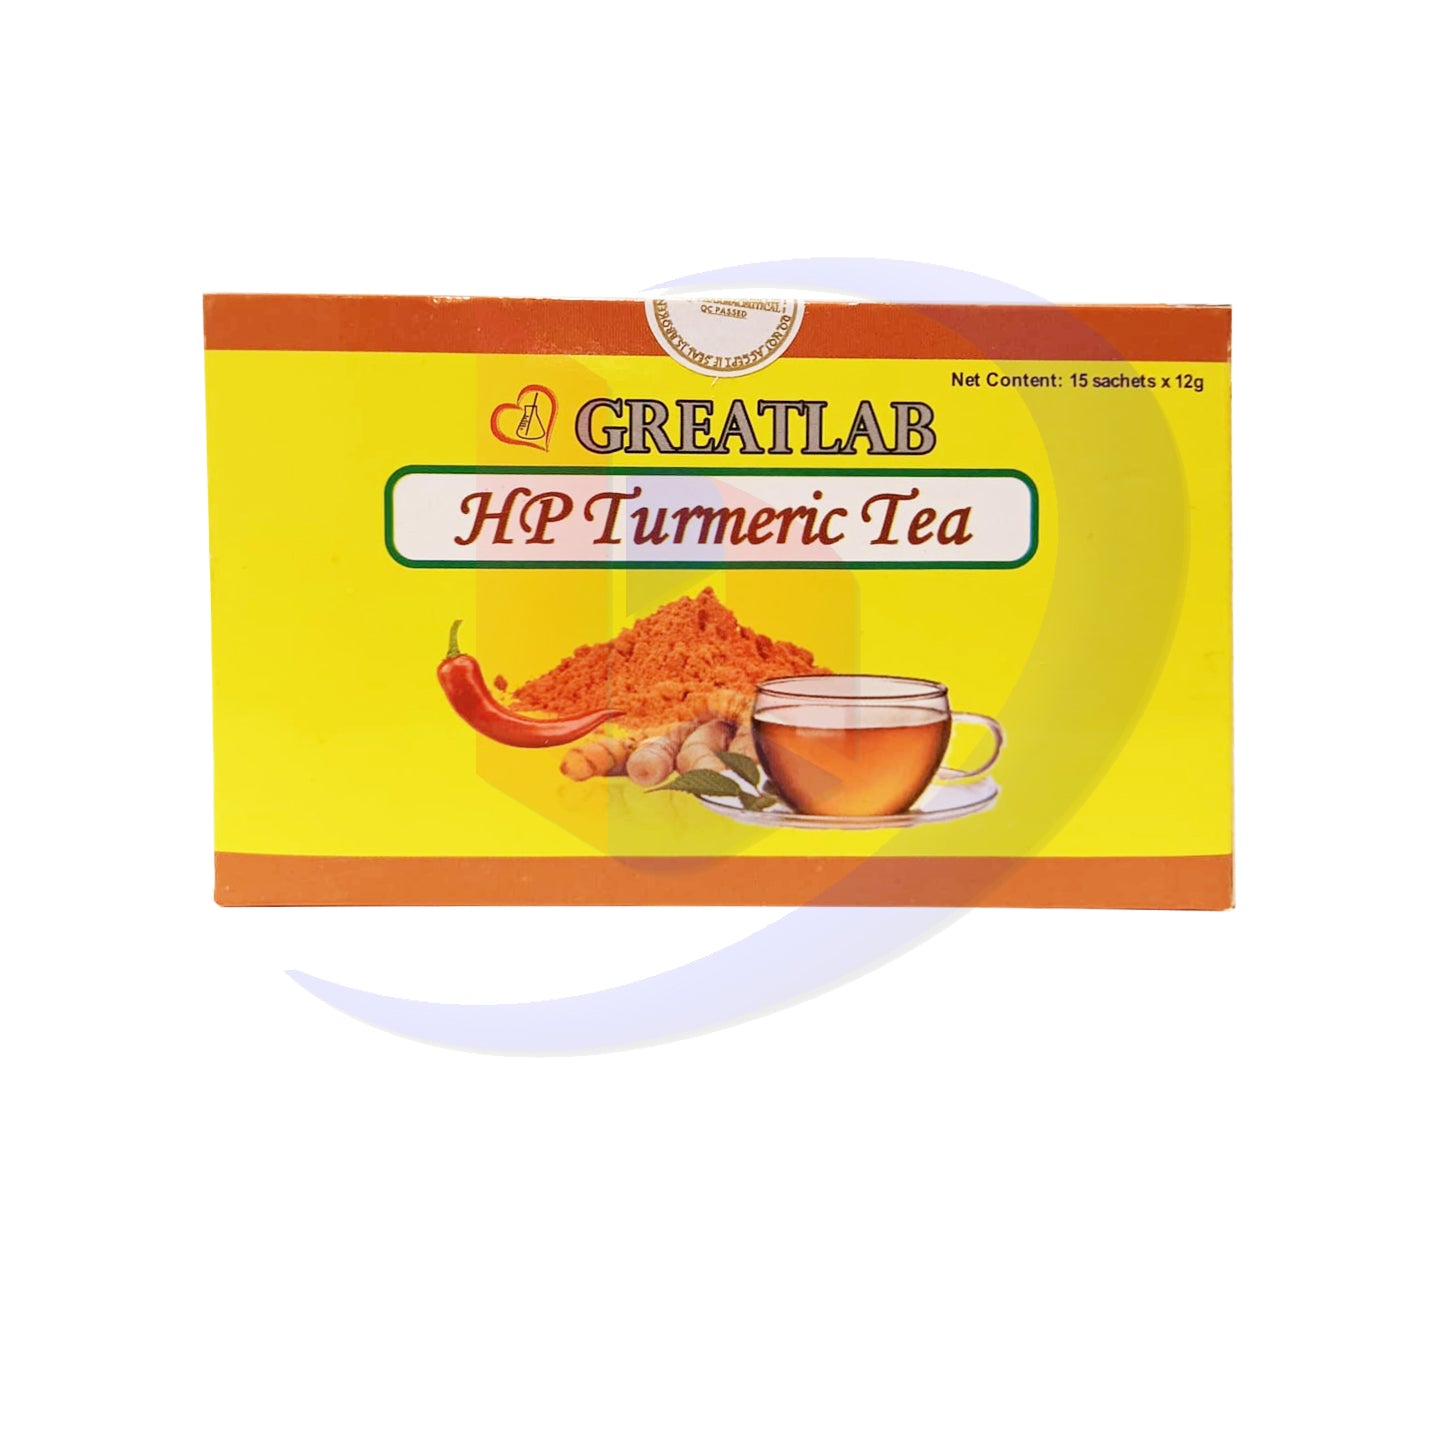 HP Turmeric Tea (Greatlab) Net Content 15 Sachet x 12g